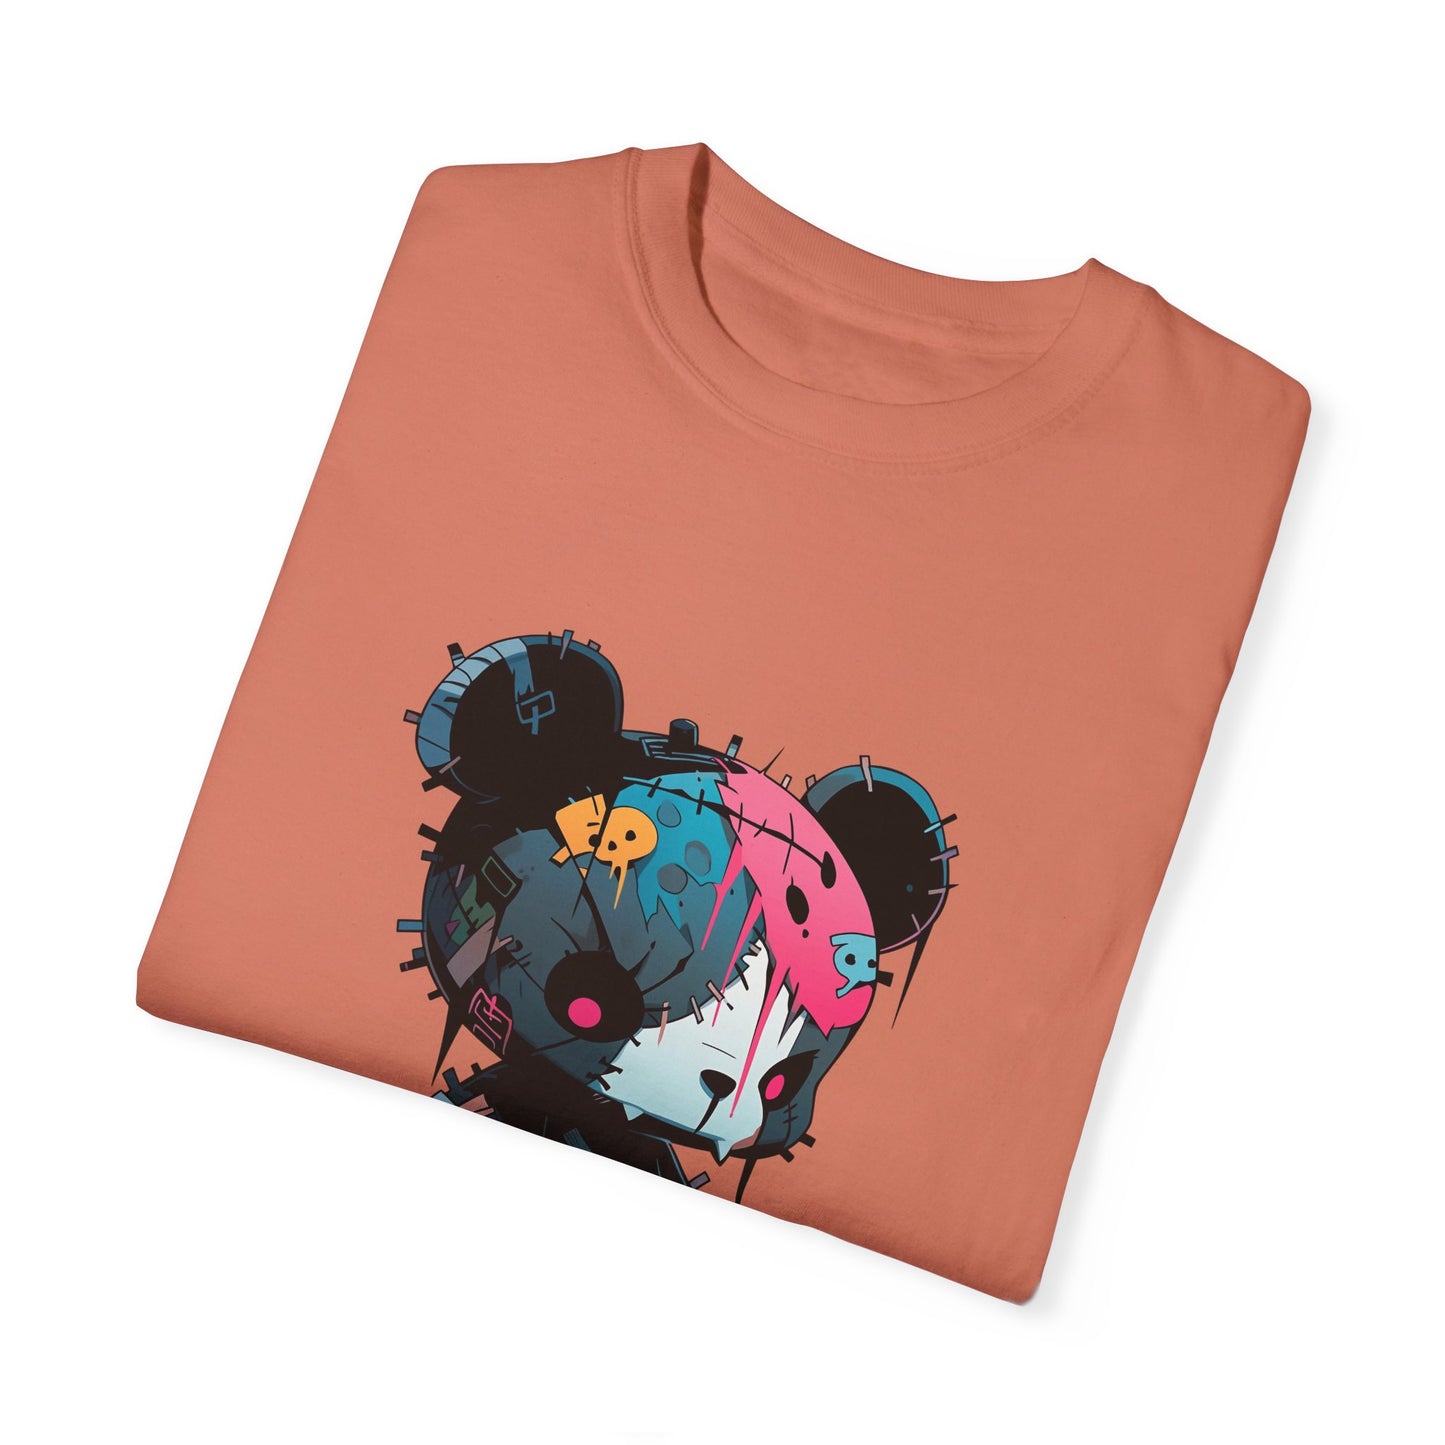 Hip Hop Teddy Bear Graphic Unisex Garment-dyed T-shirt Cotton Funny Humorous Graphic Soft Premium Unisex Men Women Terracotta T-shirt Birthday Gift-56